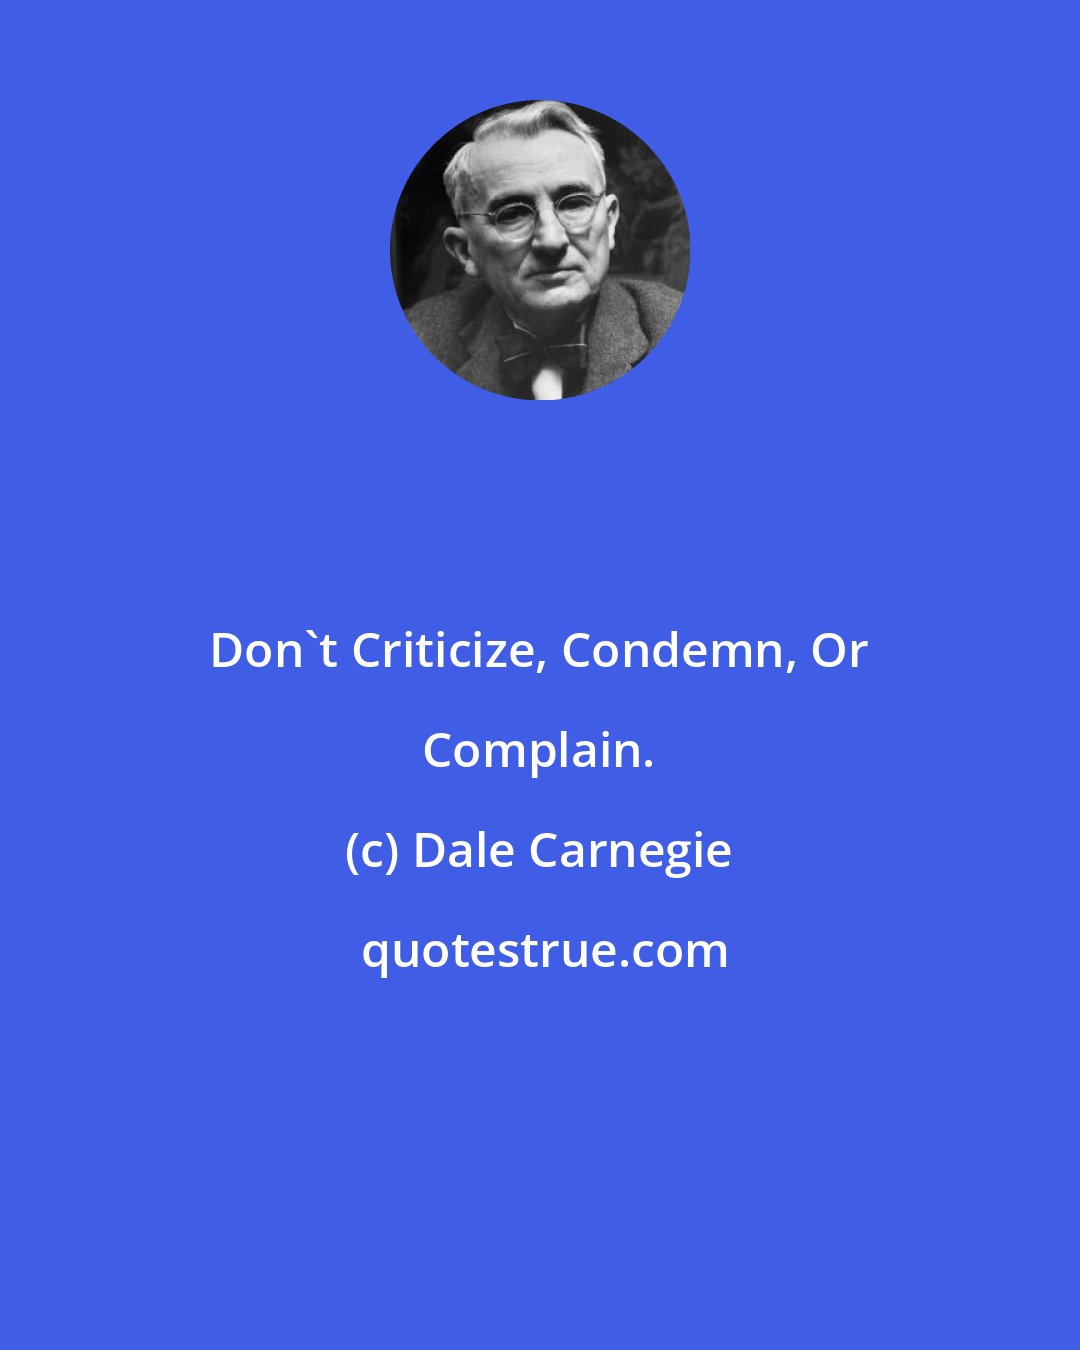 Dale Carnegie: Don't Criticize, Condemn, Or Complain.